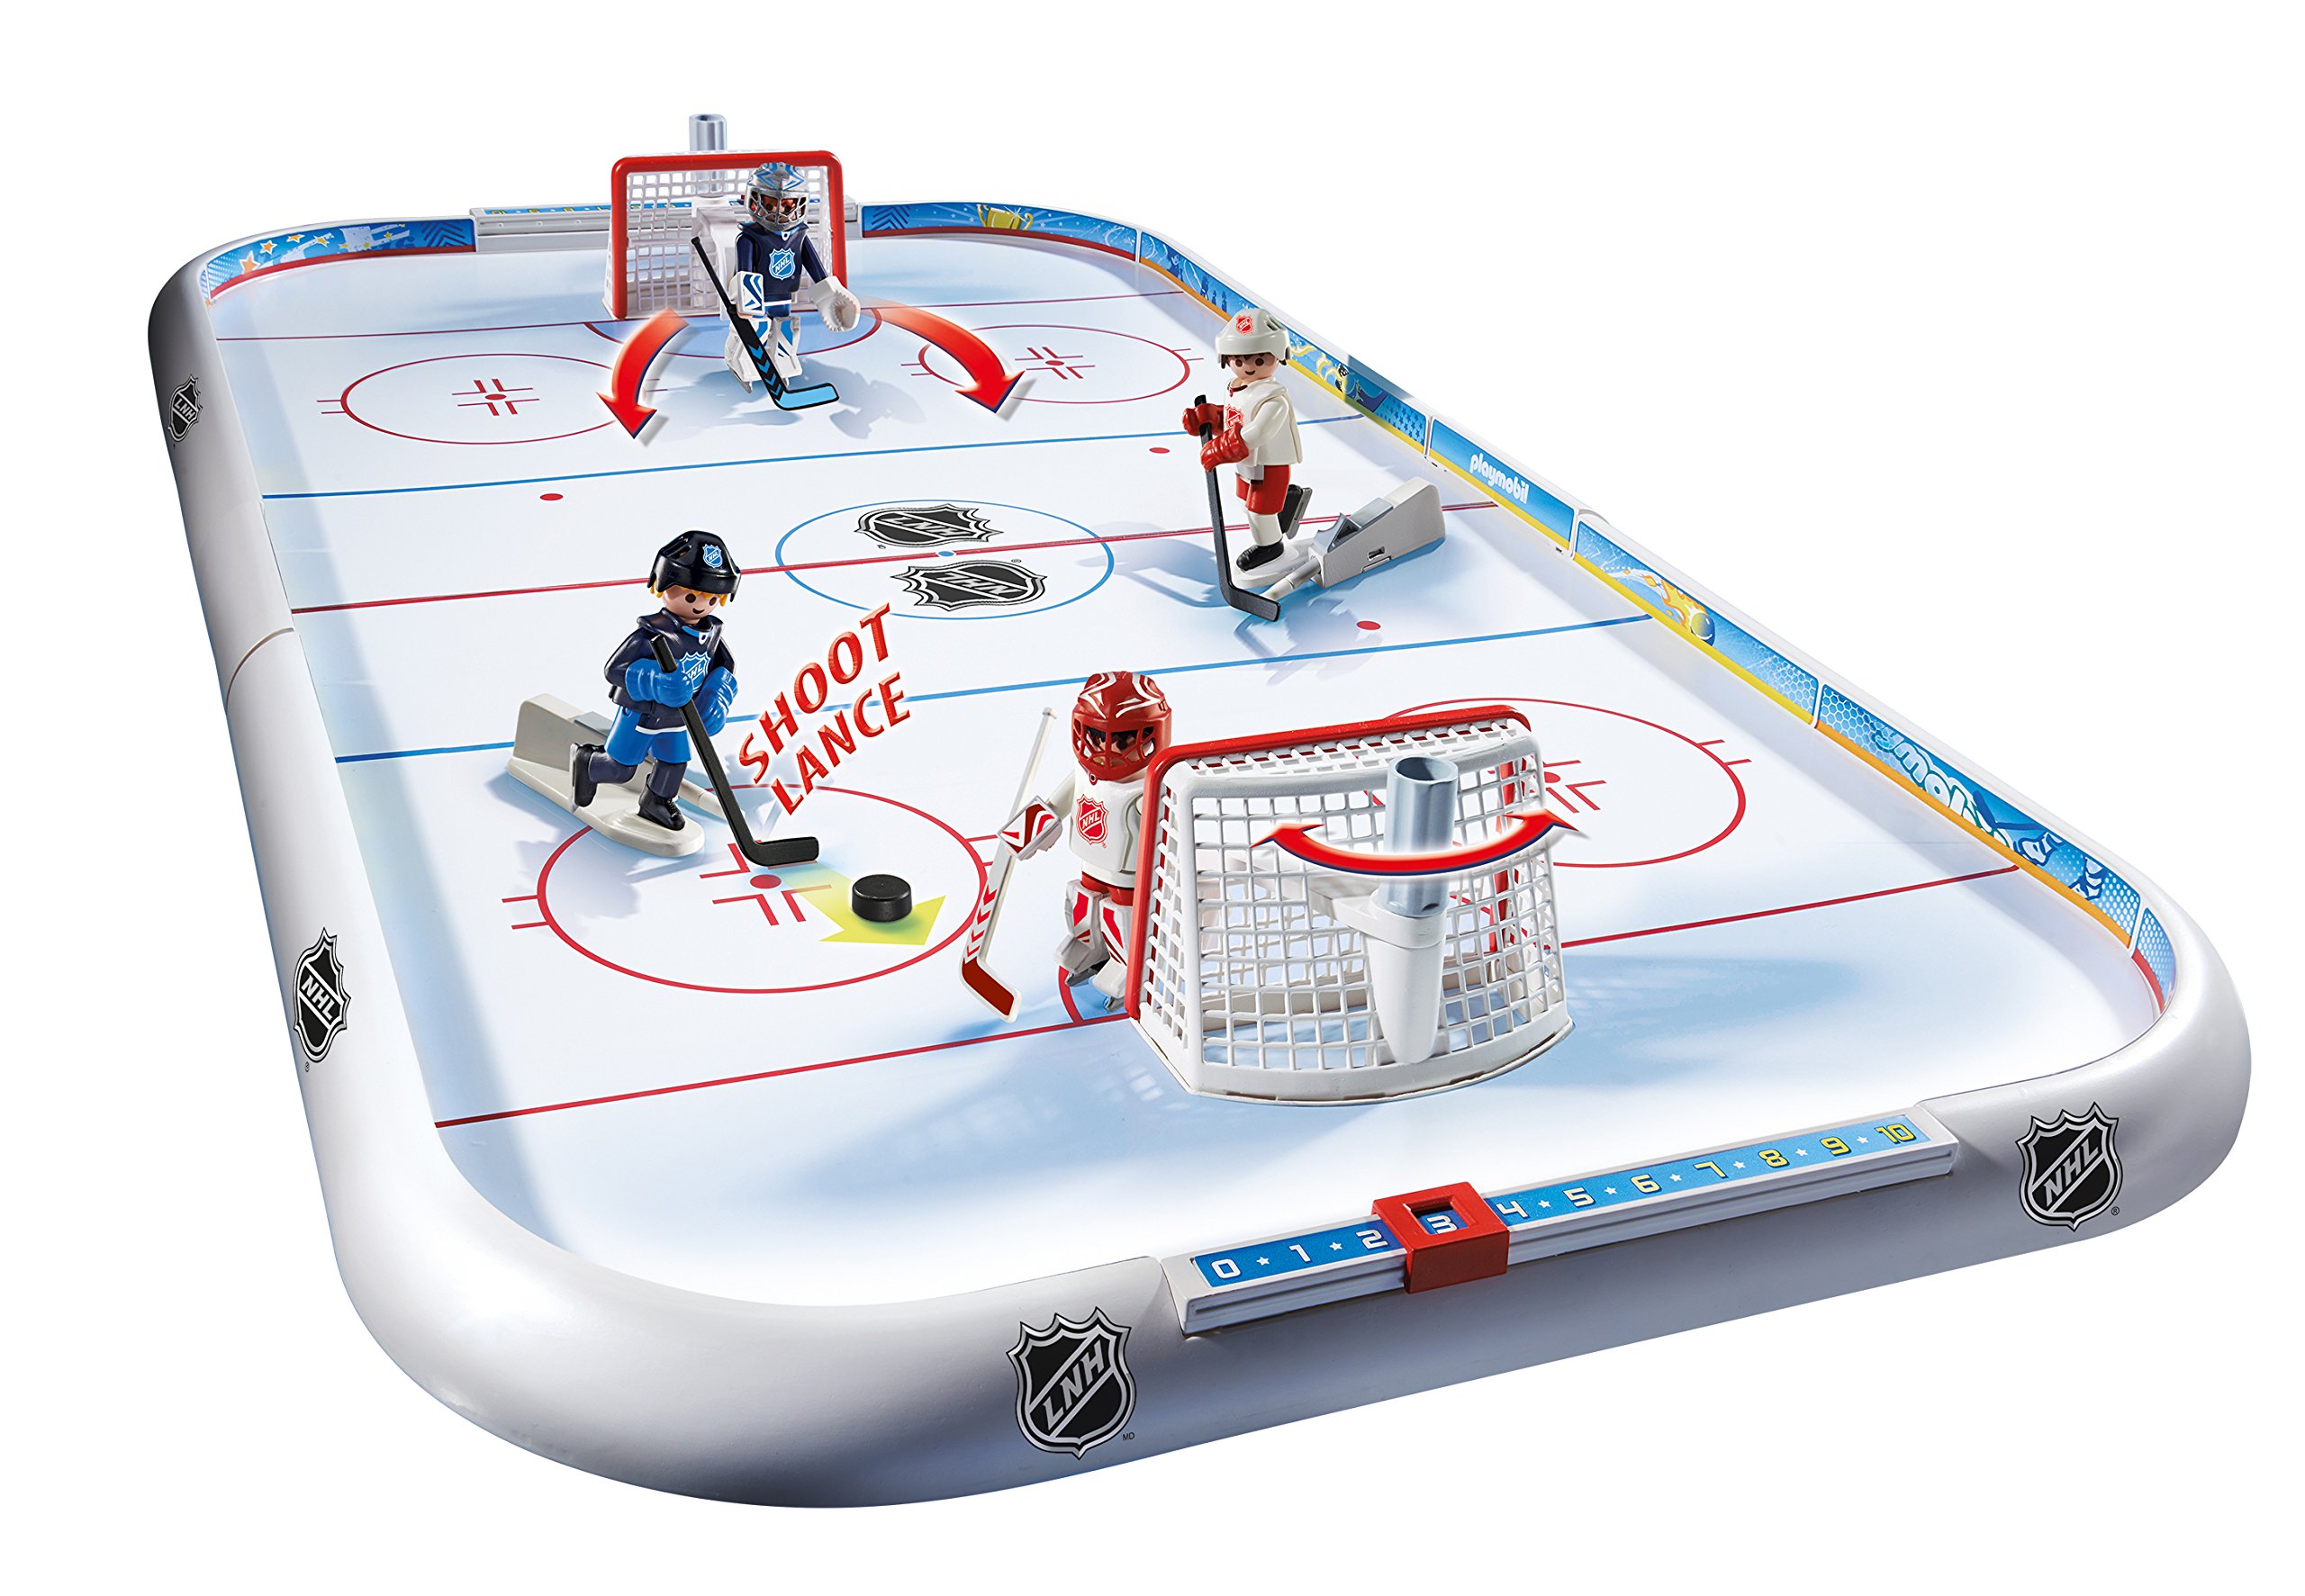 Playmobil NHL Hockey Arena